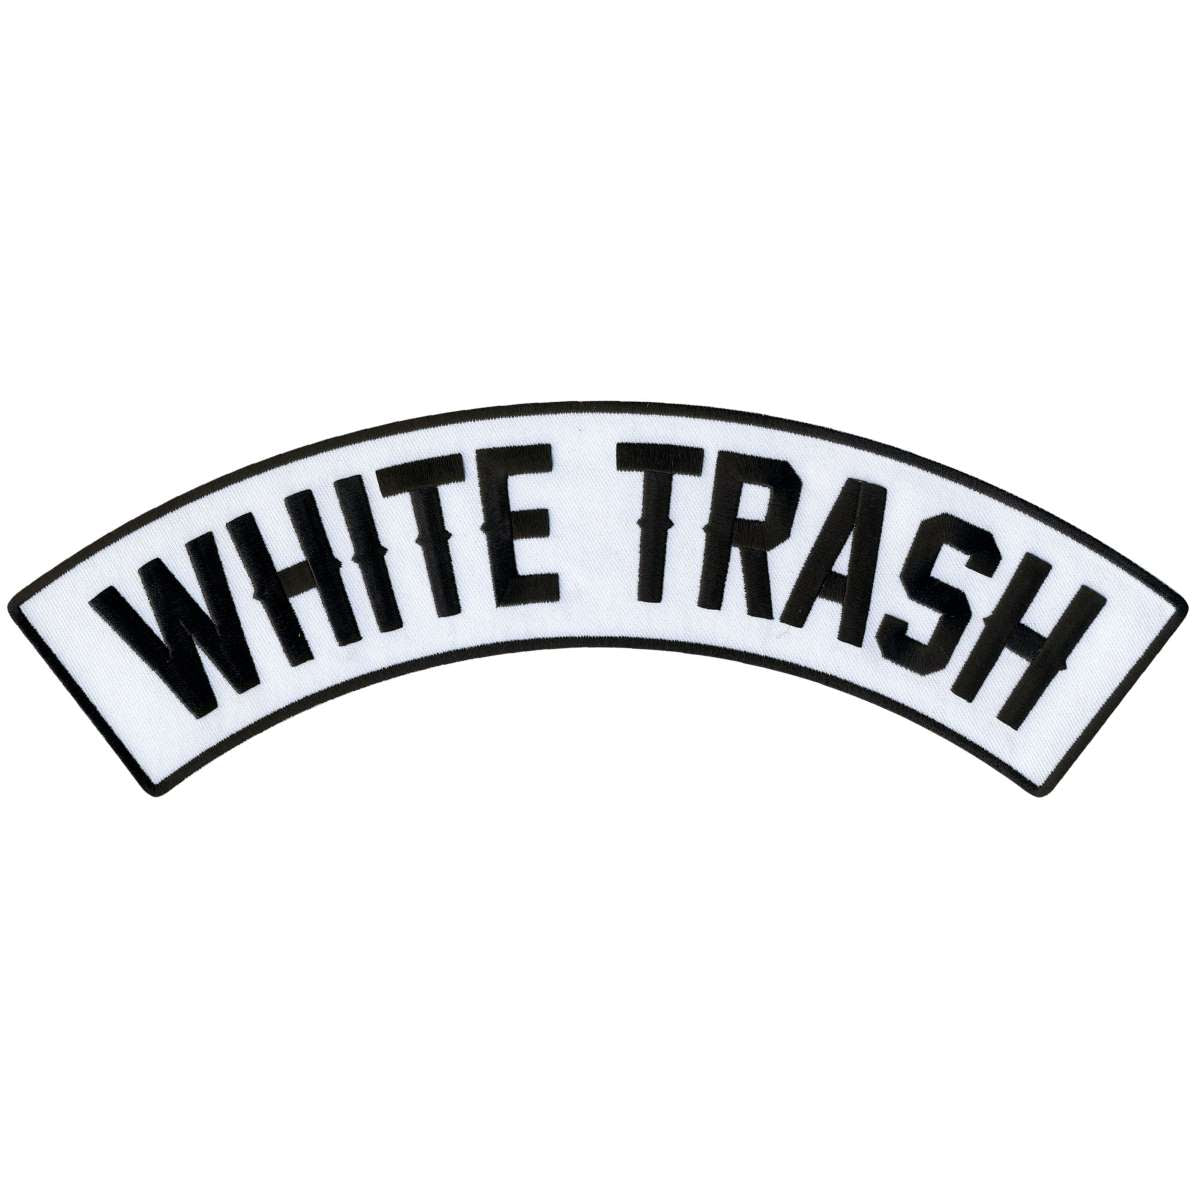 Hot Leathers White Trash 12" X 3" Top Rocker Patch PPM4209